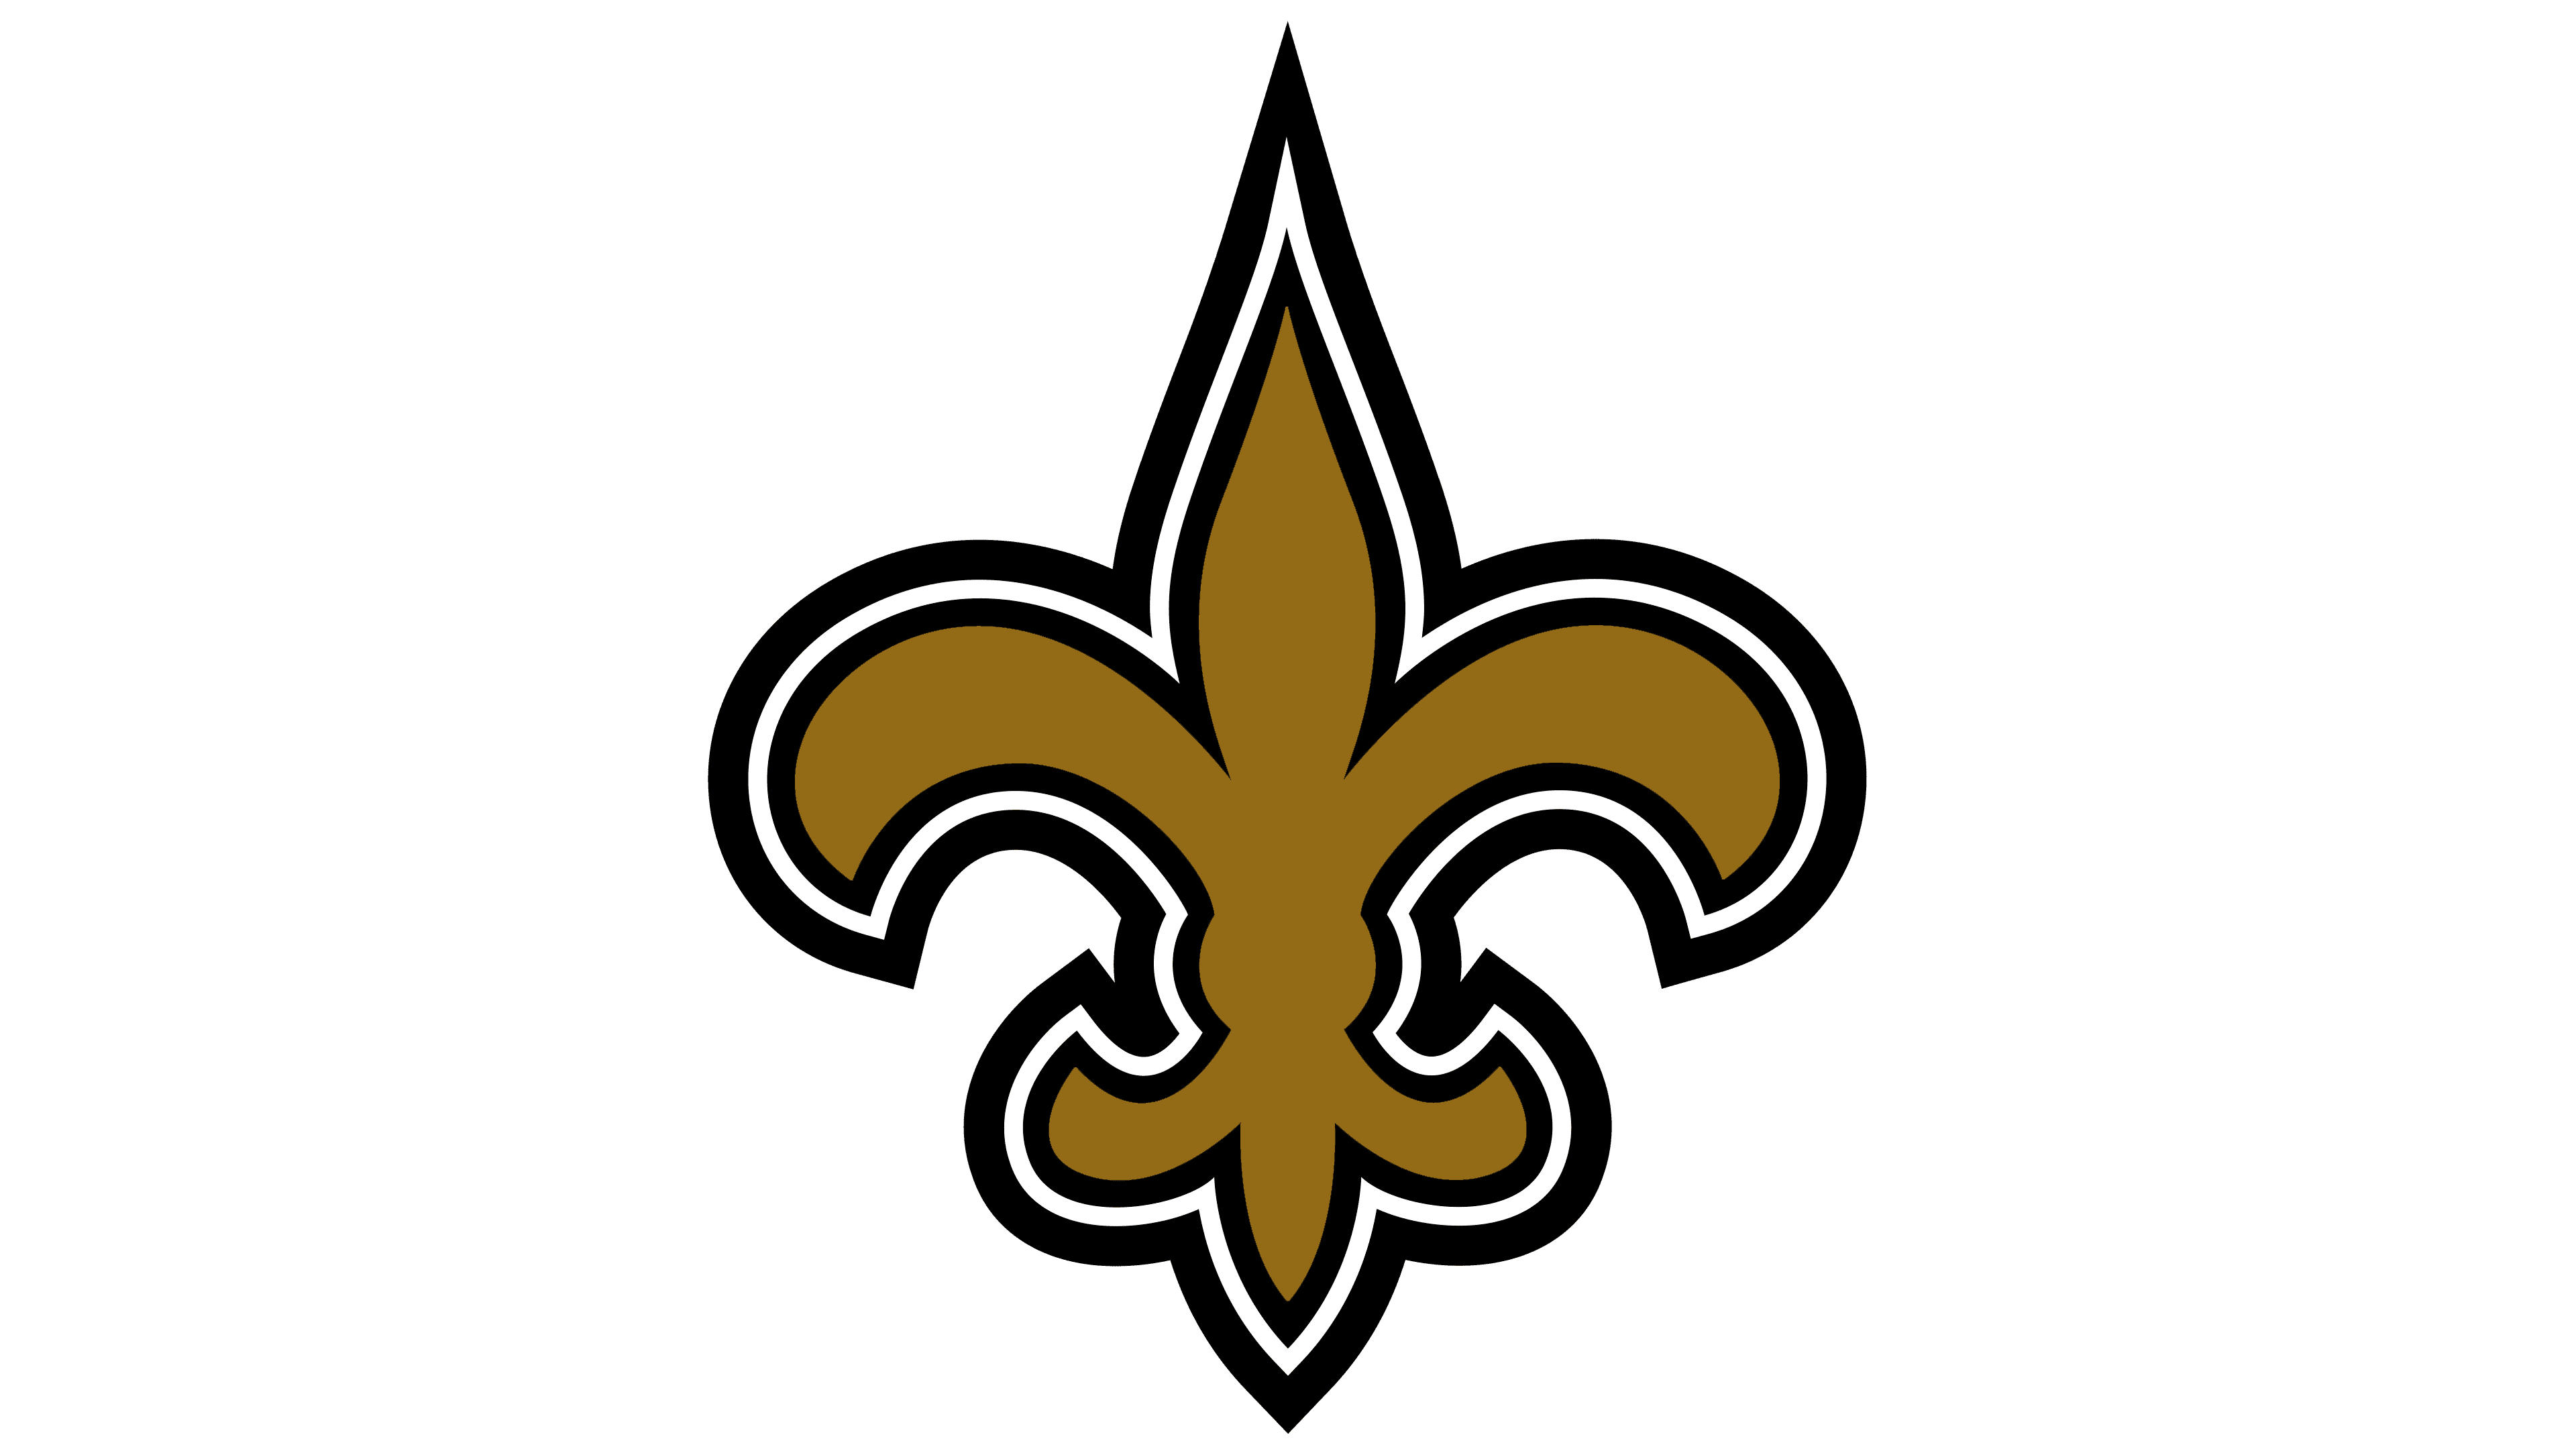 New Orleans Saints Logo Printable